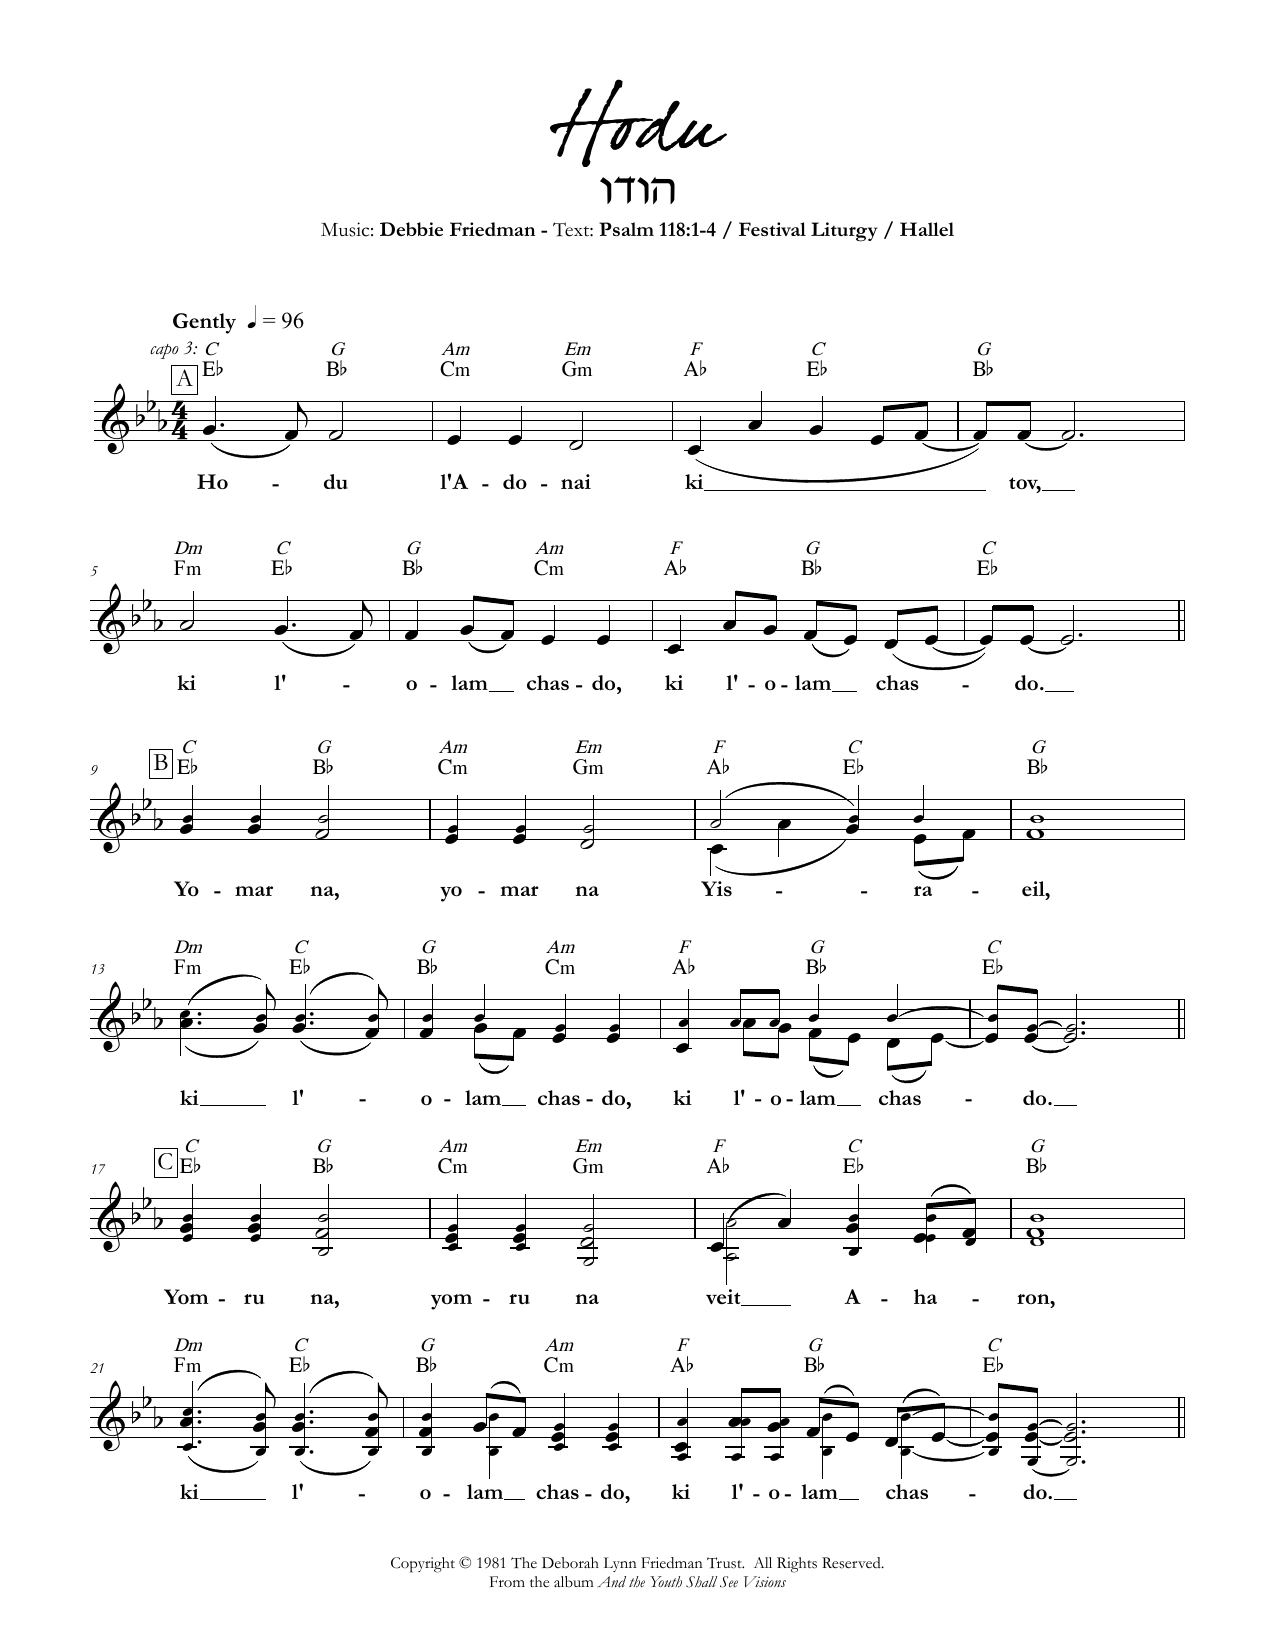 Download Debbie Friedman Hodu Sheet Music and learn how to play Lead Sheet / Fake Book PDF digital score in minutes